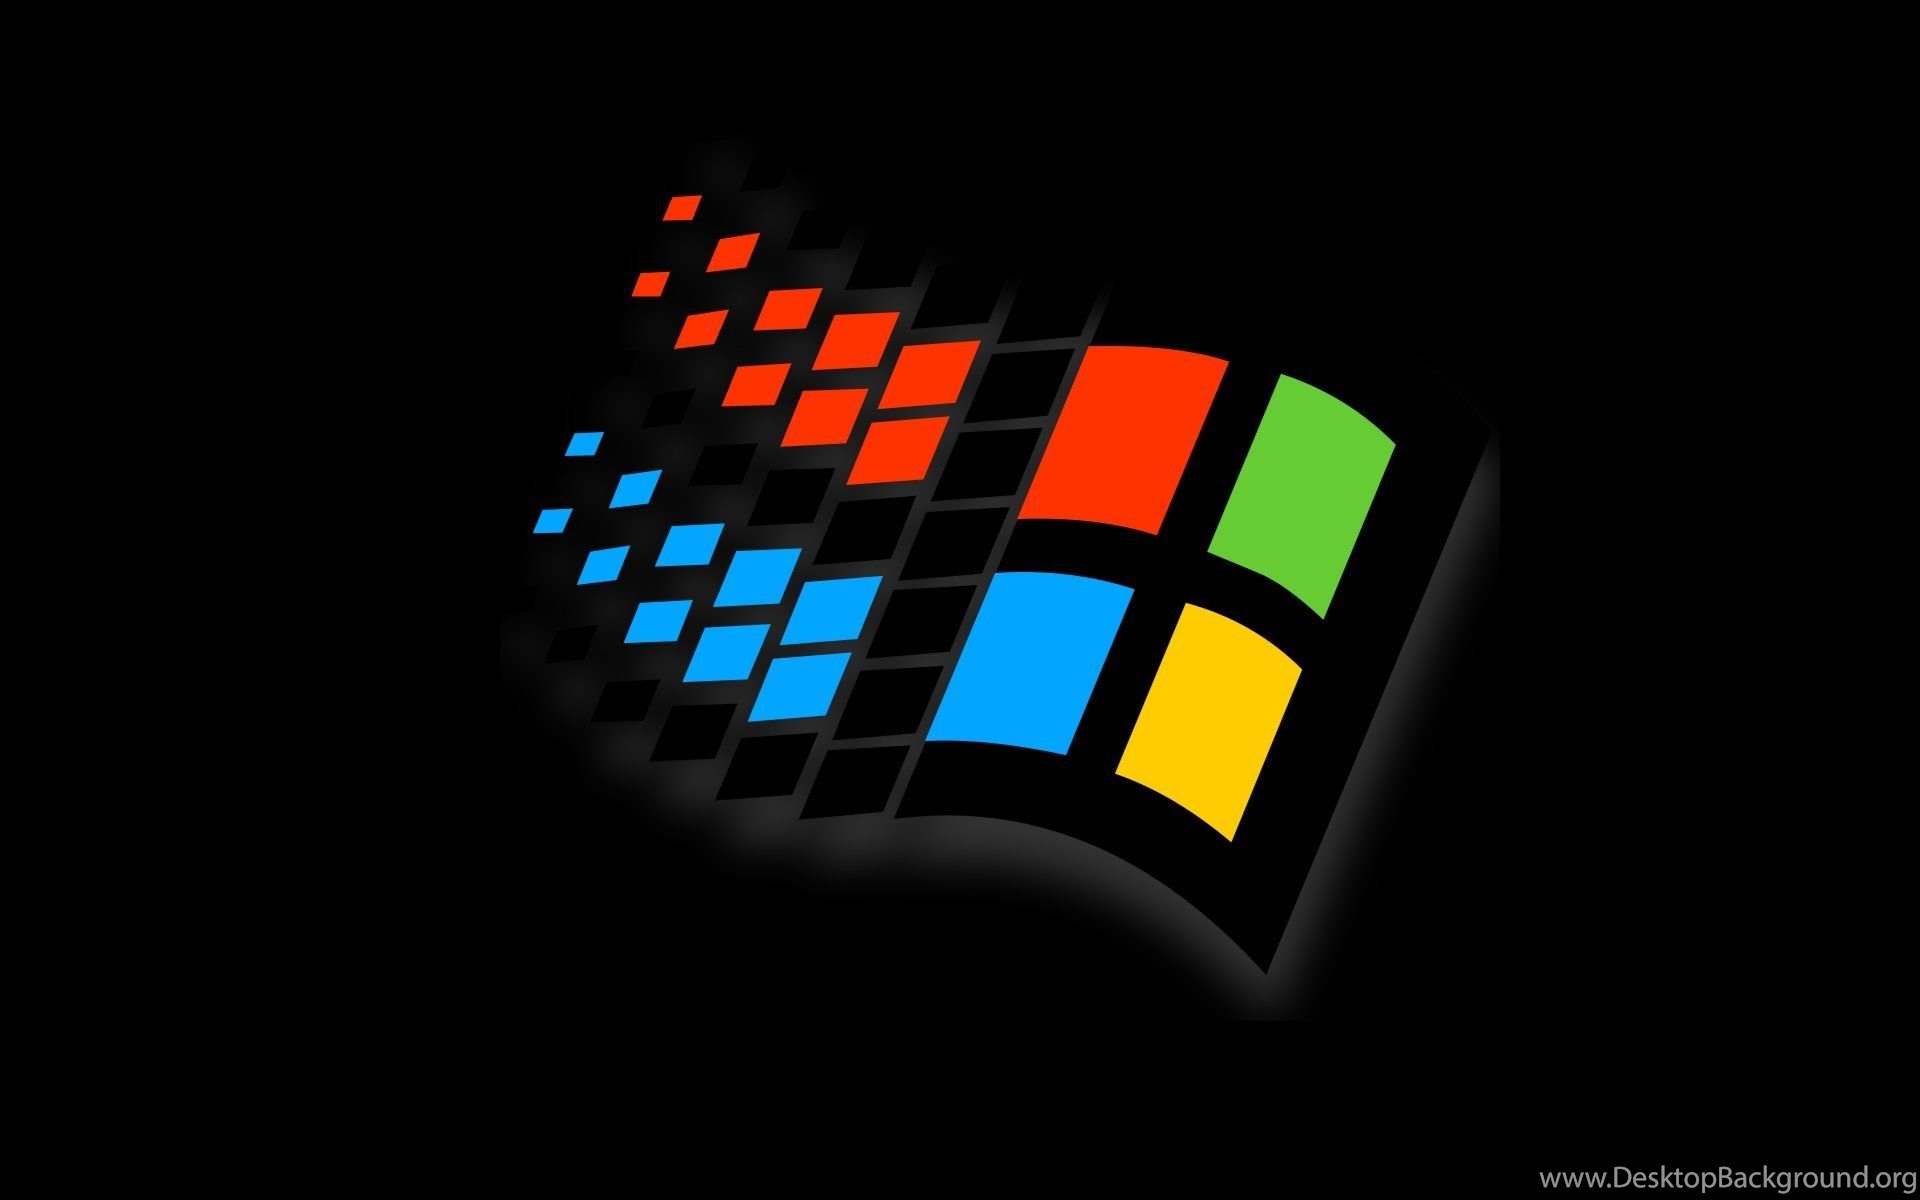 Windows 98 Wallpapers Wallpapers Cave Desktop Background